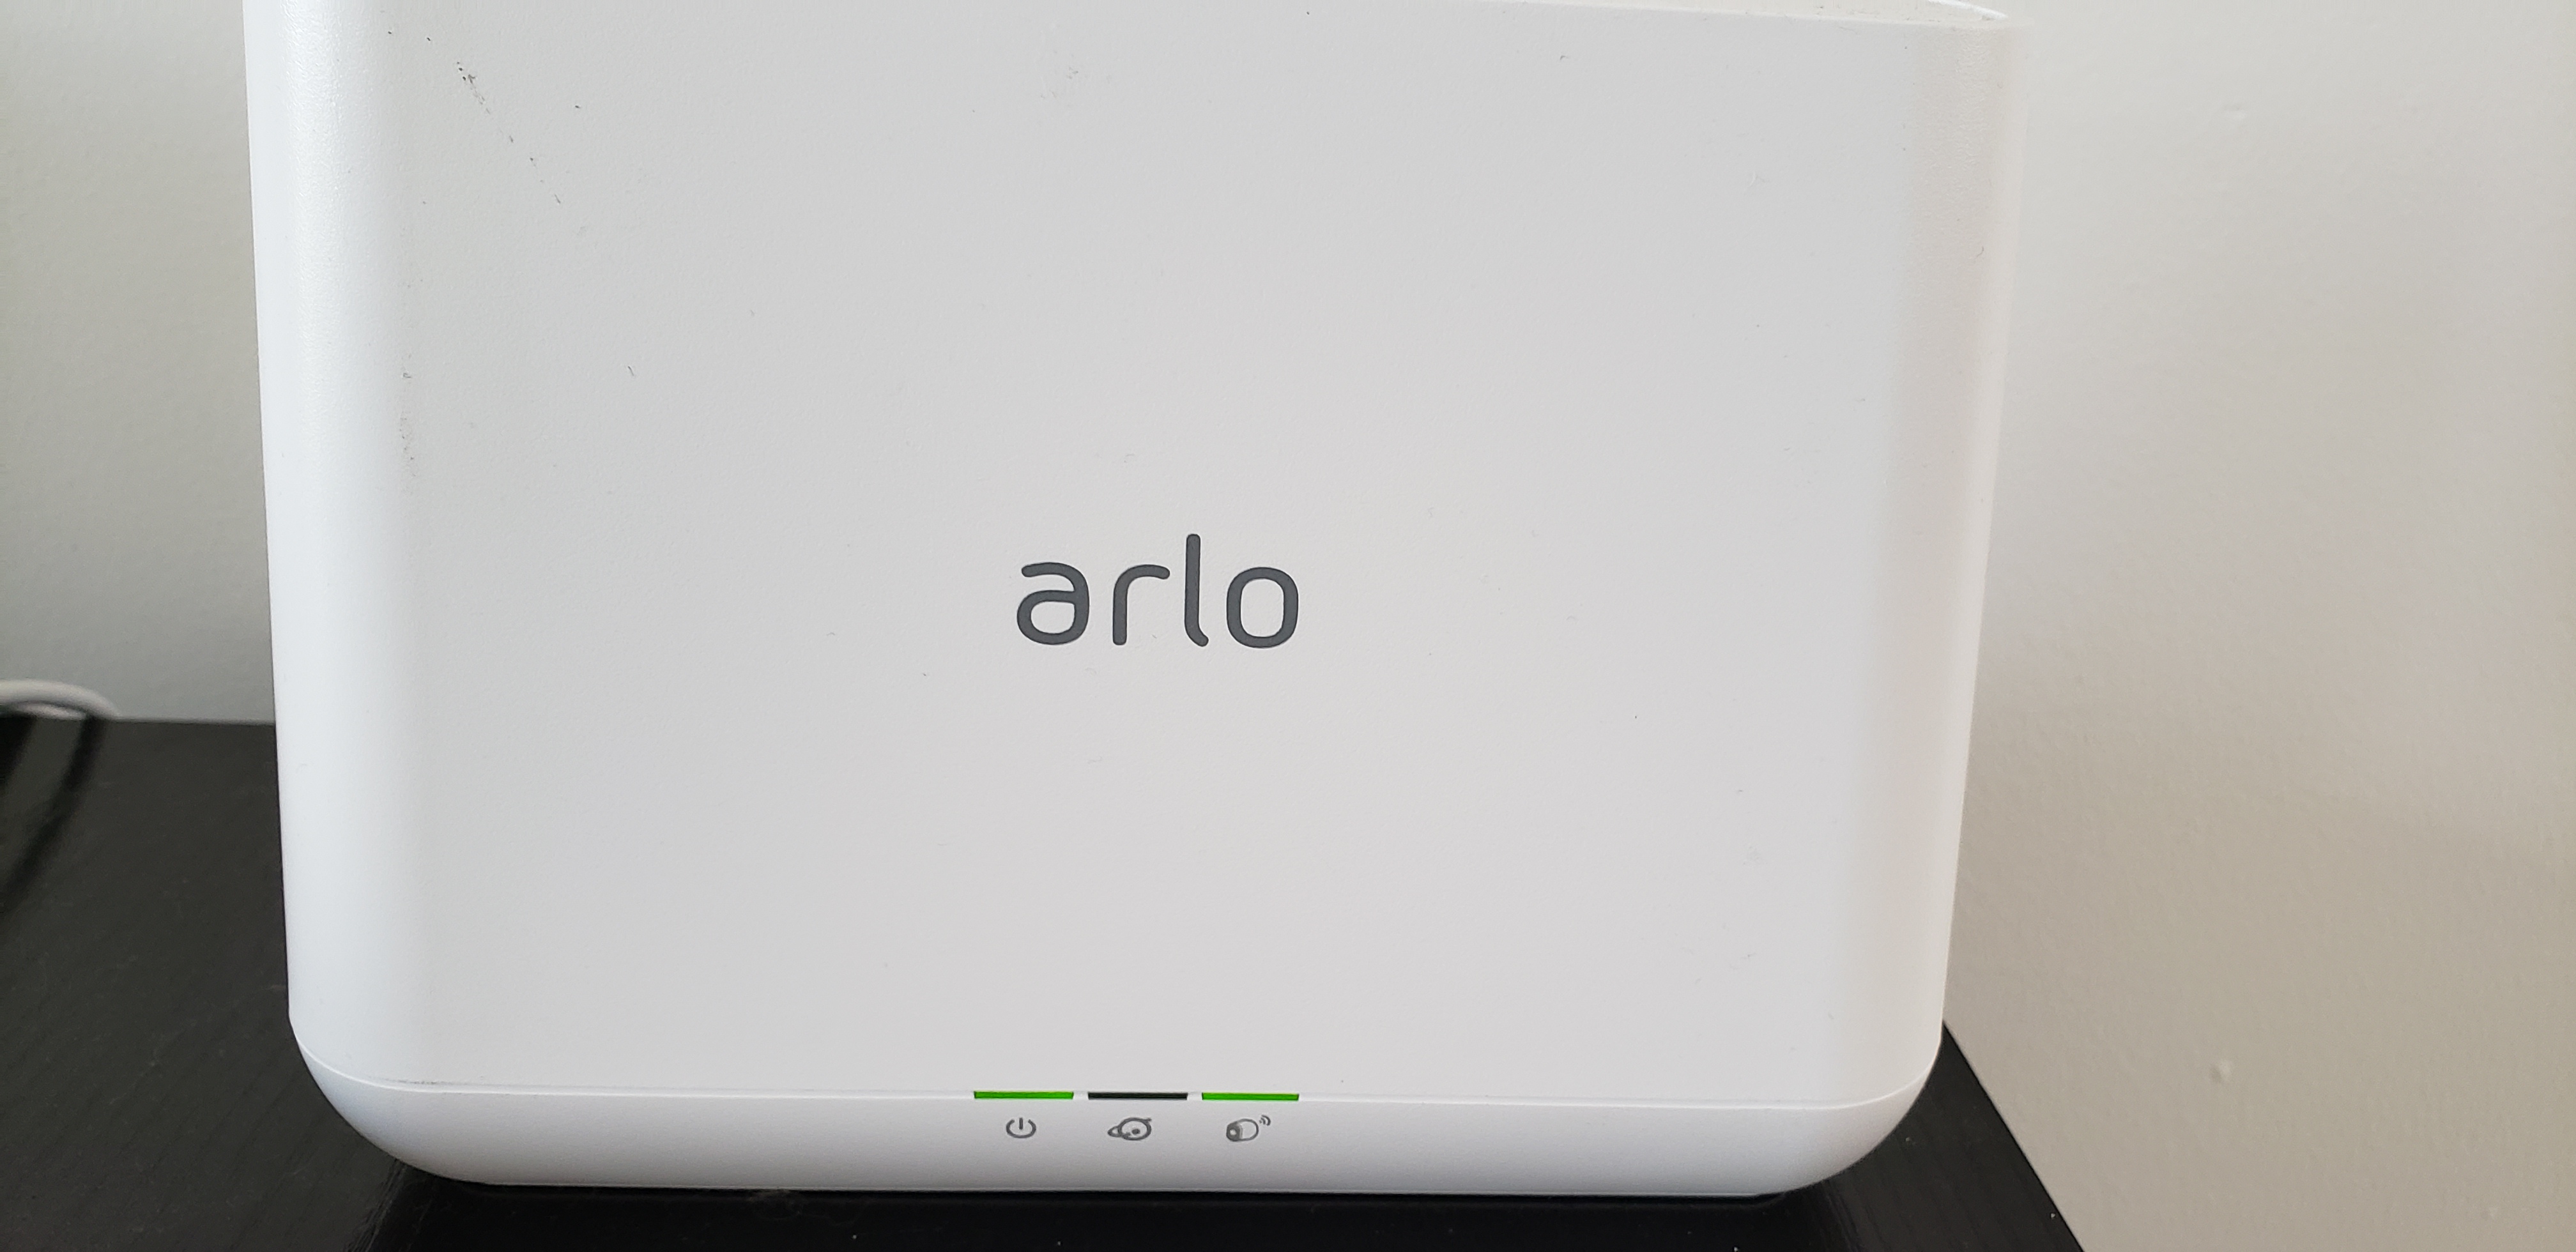 arlo pro 2 base station keeps going offline